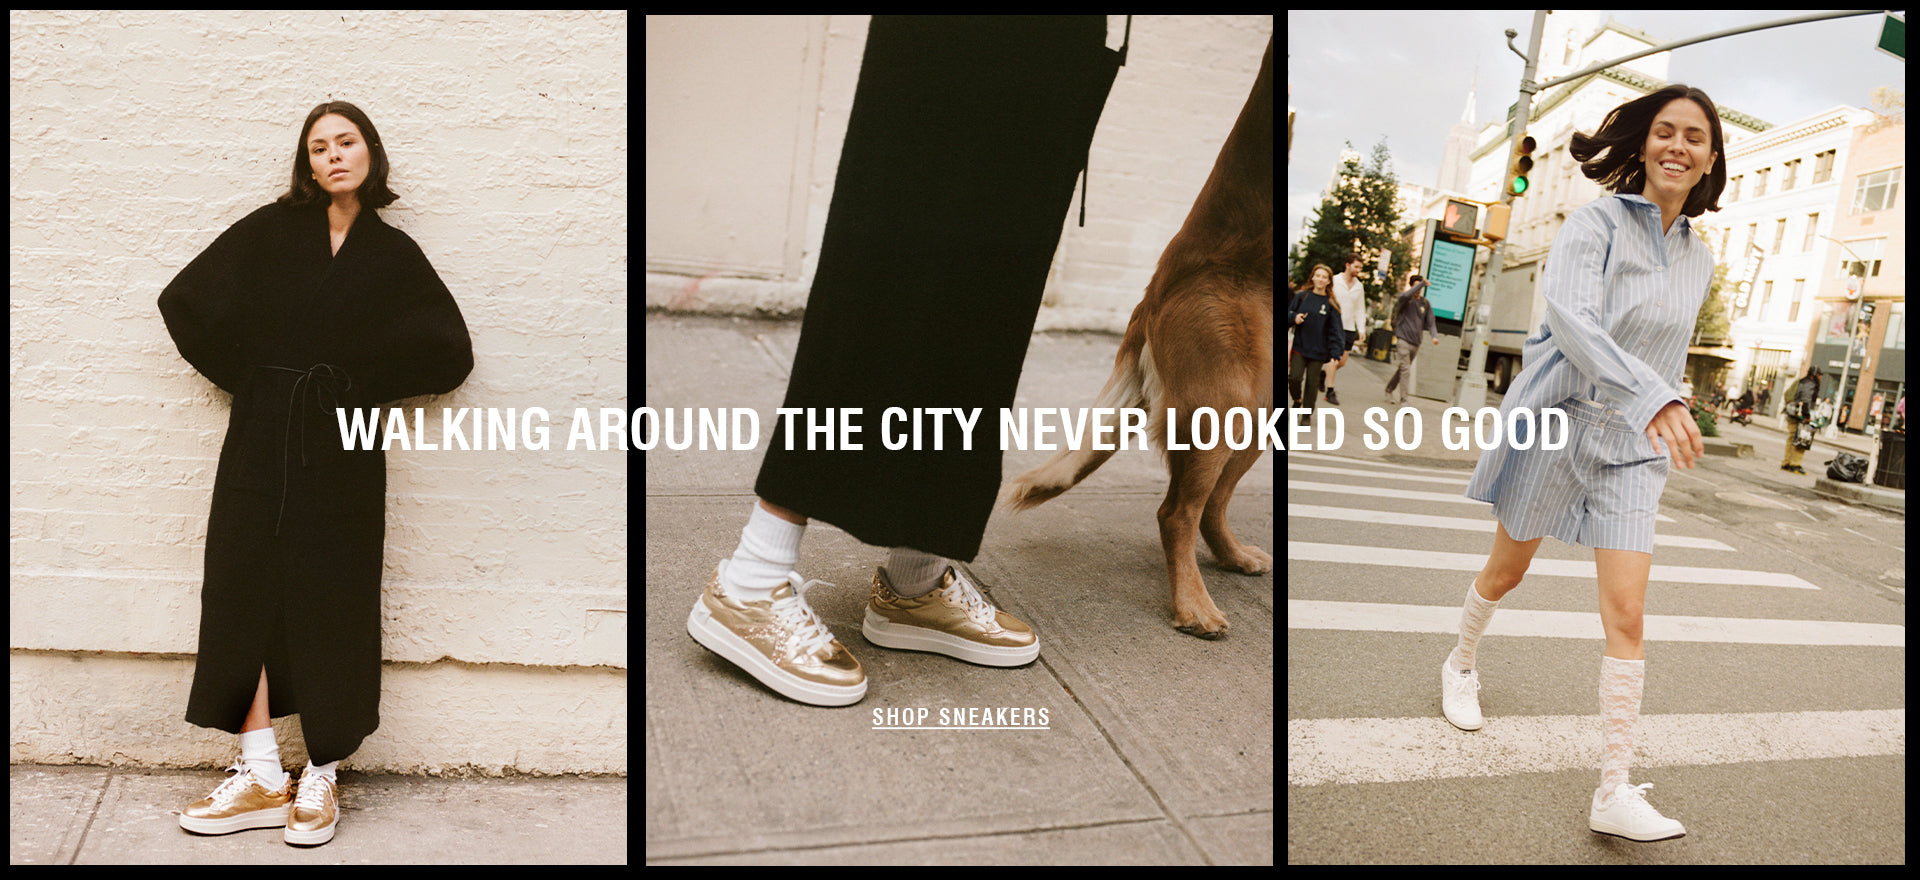 Walking around the city never looked so good - Schutz Sneakers